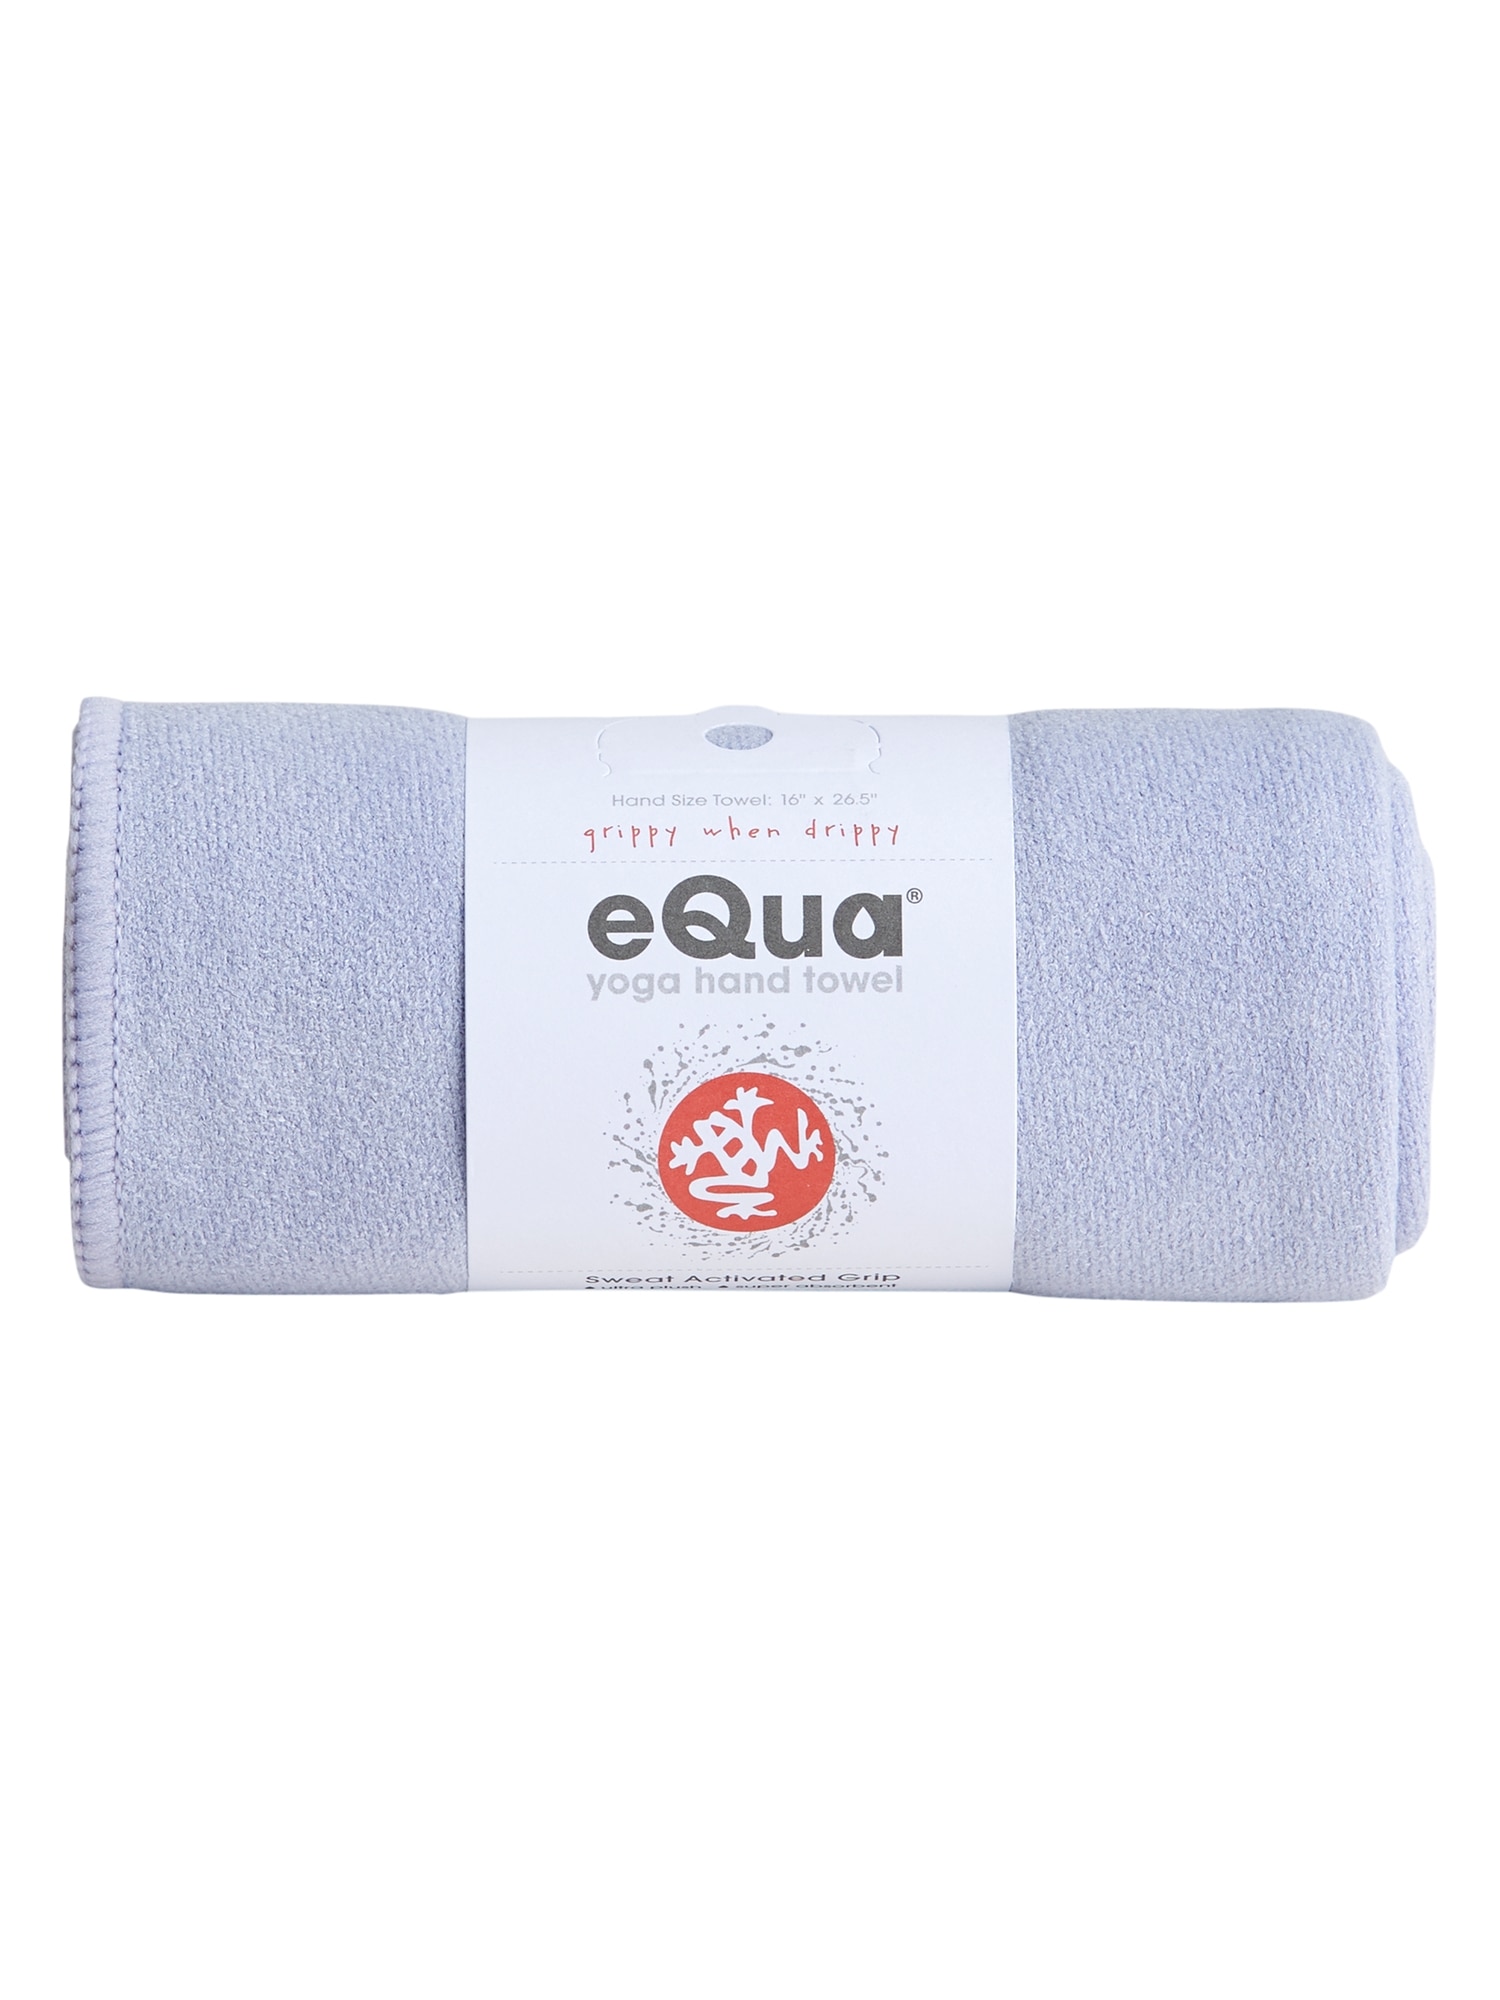 eQua Hand Yoga Towel by Manduka\u0026#174 